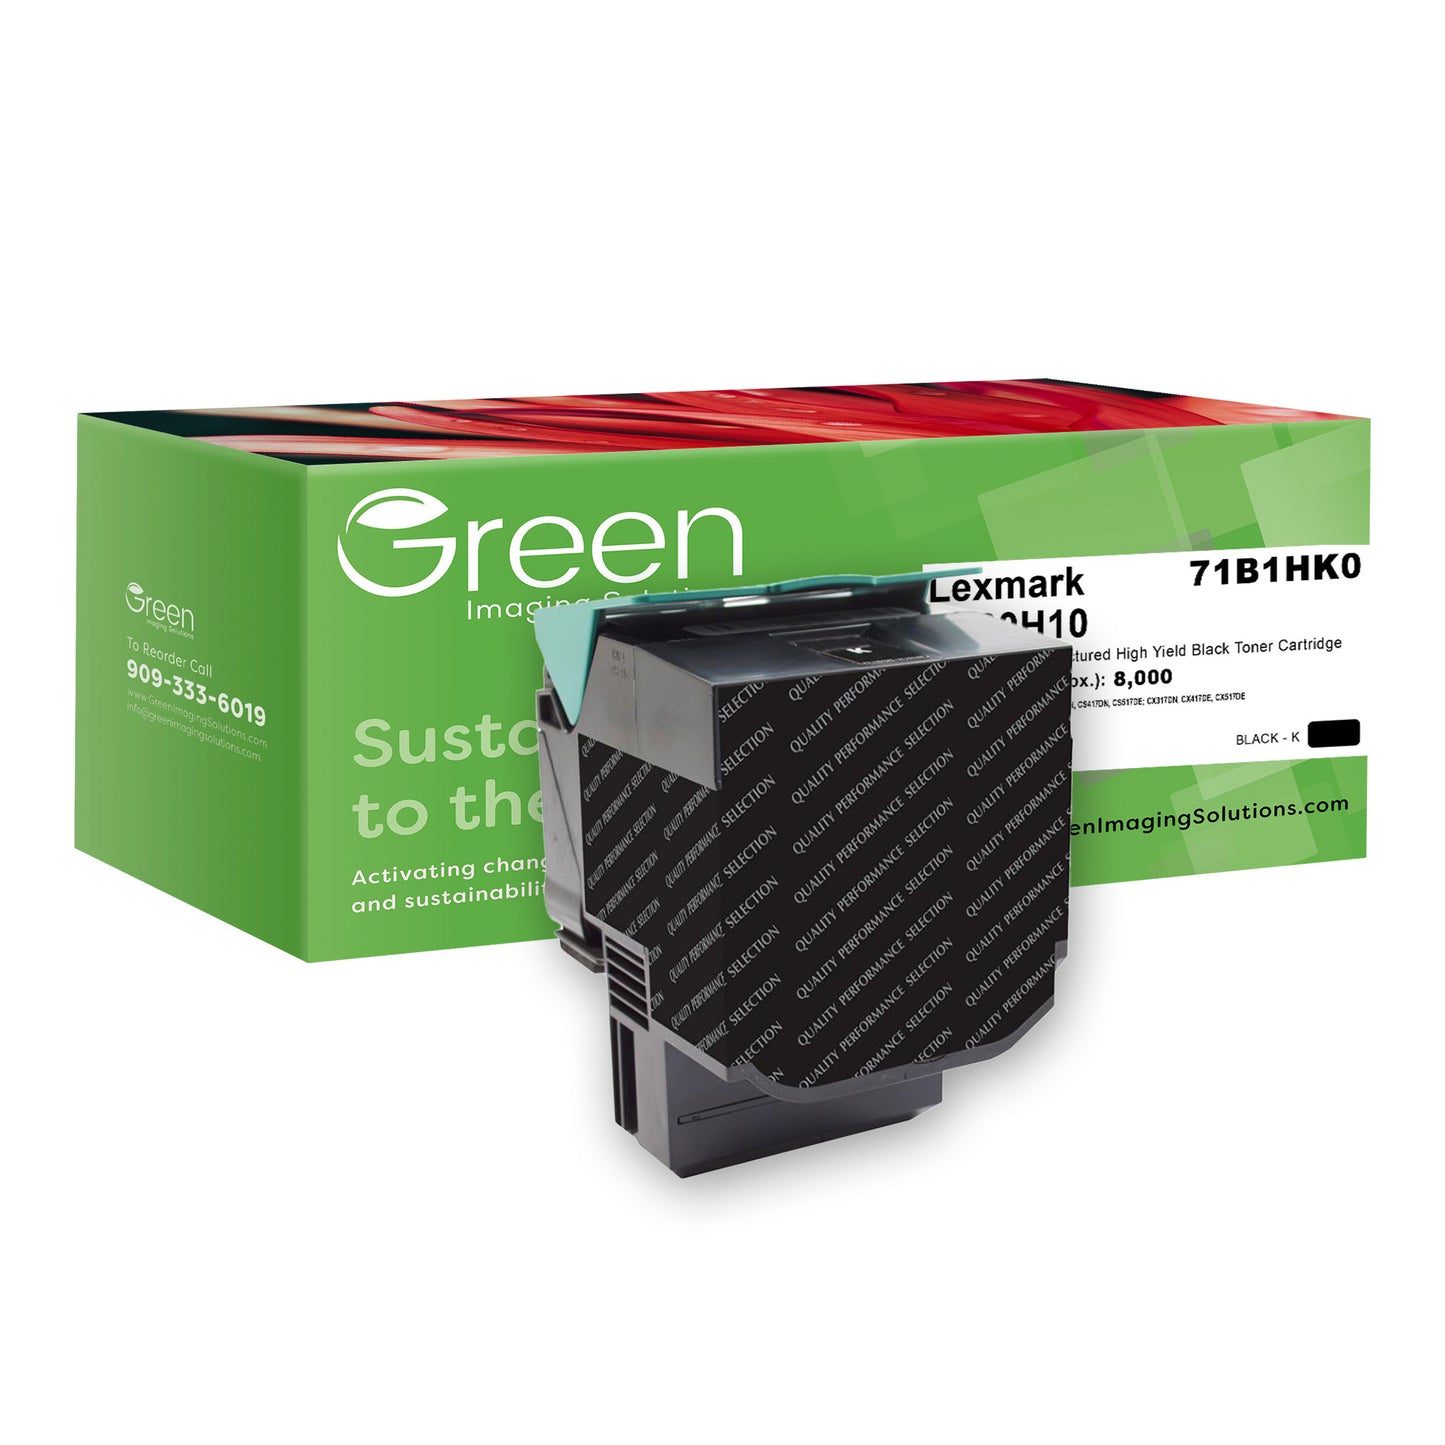 Green Imaging Solutions USA Remanufactured High Yield Black Toner Cartridge for Lexmark CS417/CS517